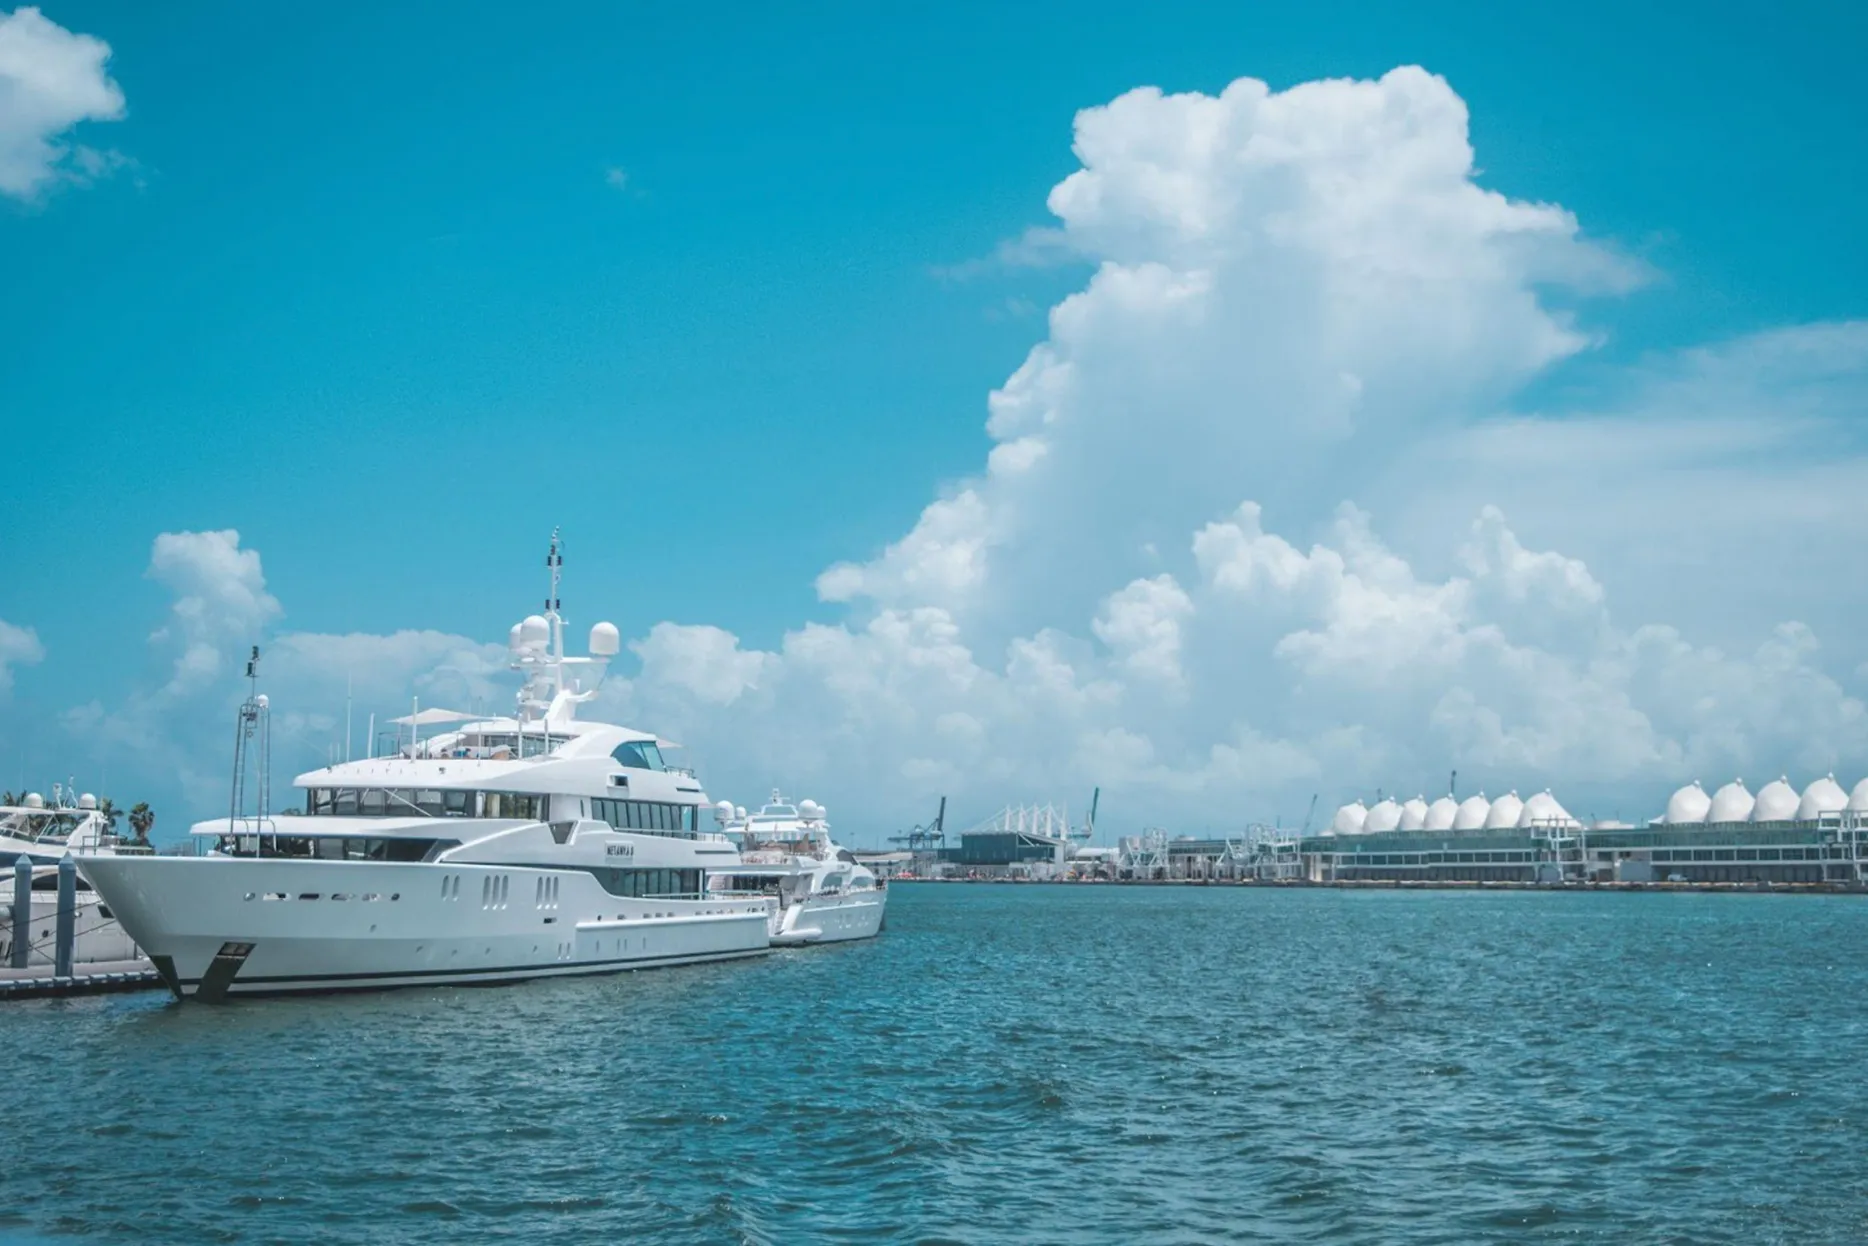 A superyacht in Miami, Florida